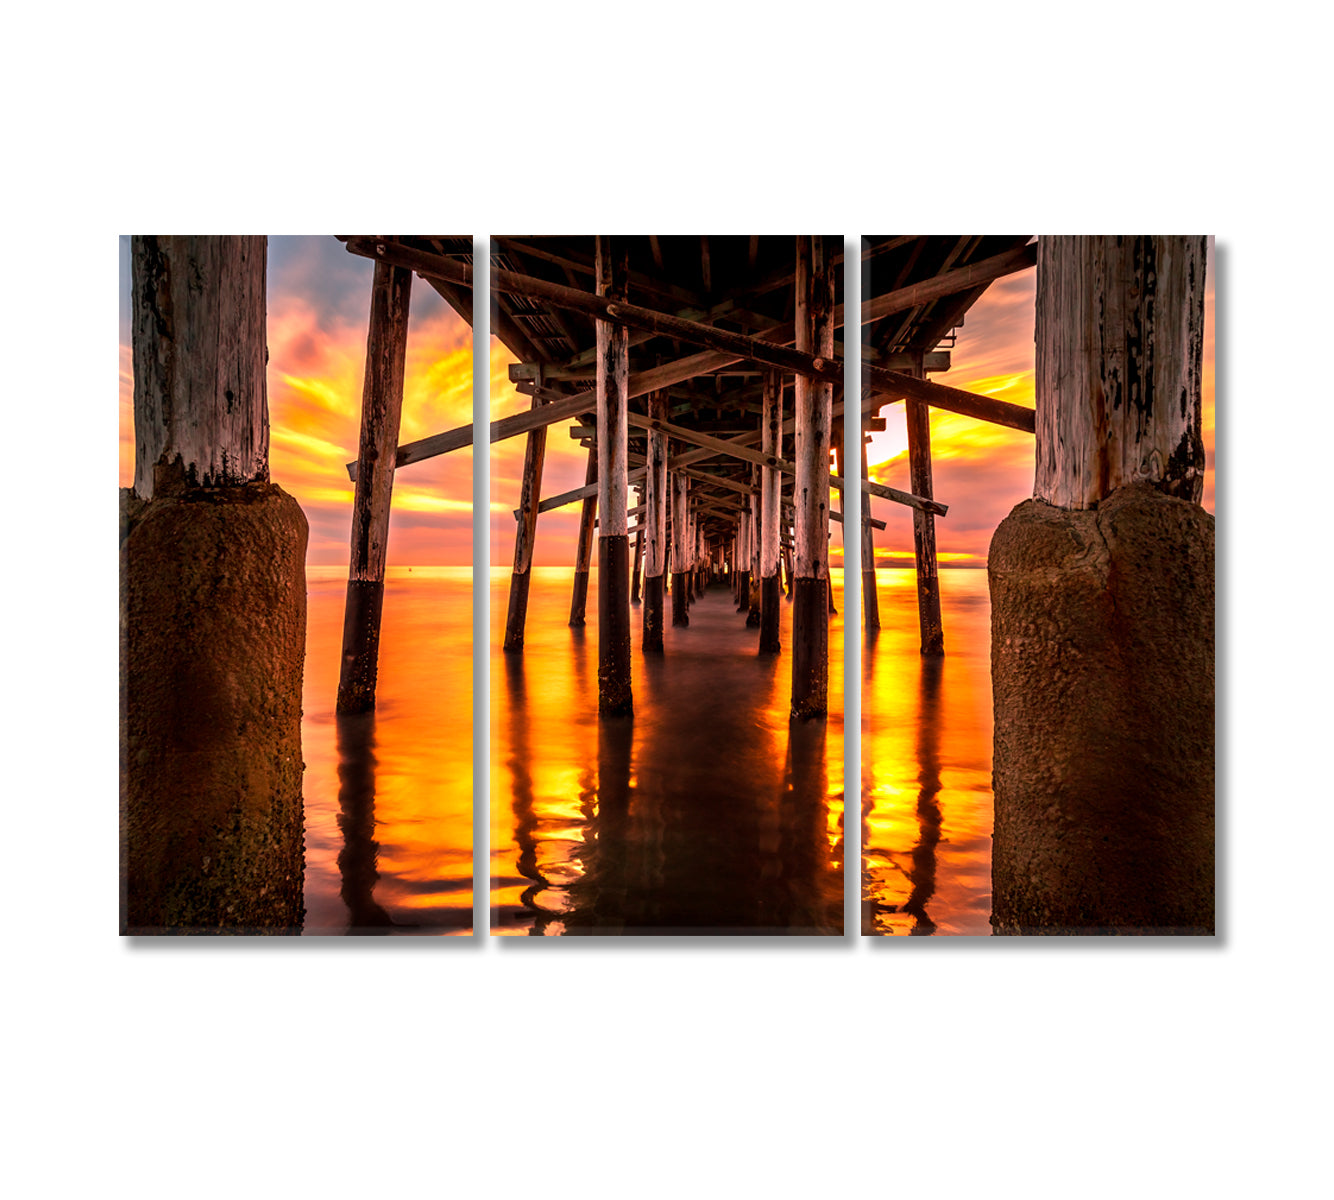 Under the Newport Beach Pier at Sunset Canvas Print-Canvas Print-CetArt-3 Panels-36x24 inches-CetArt